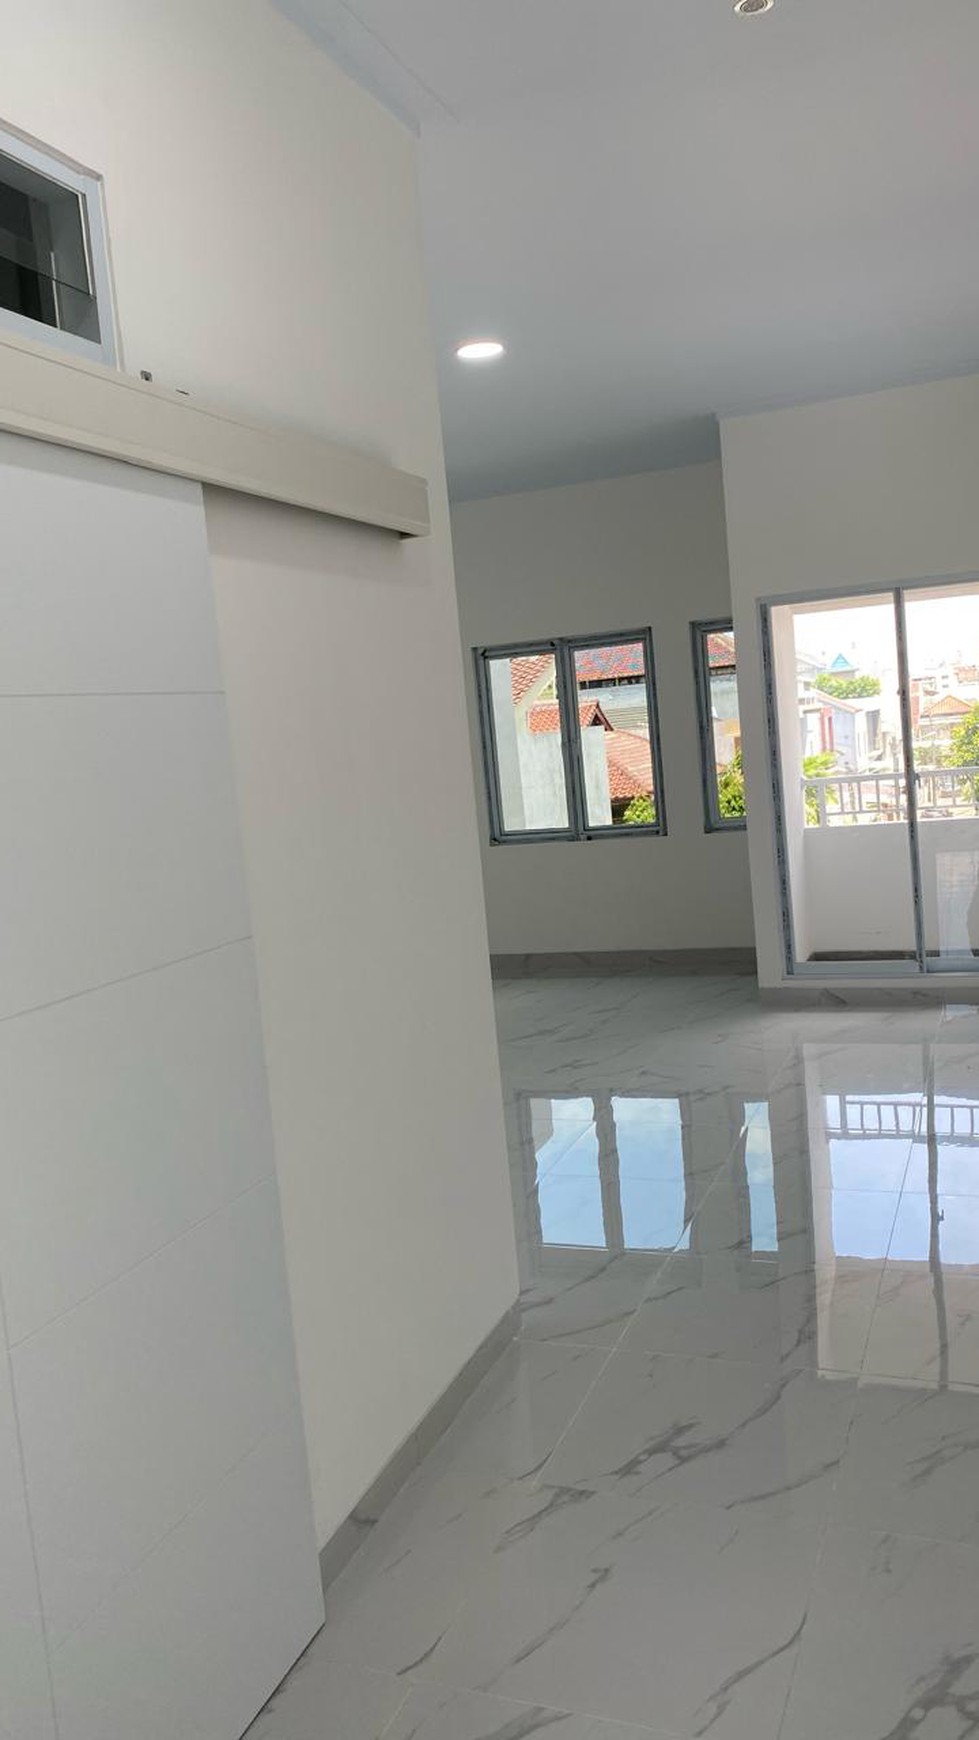 Rumah Brand New 2 M an , 3 lantai di Tanjung Duren, Grogol, Jakarta Barat